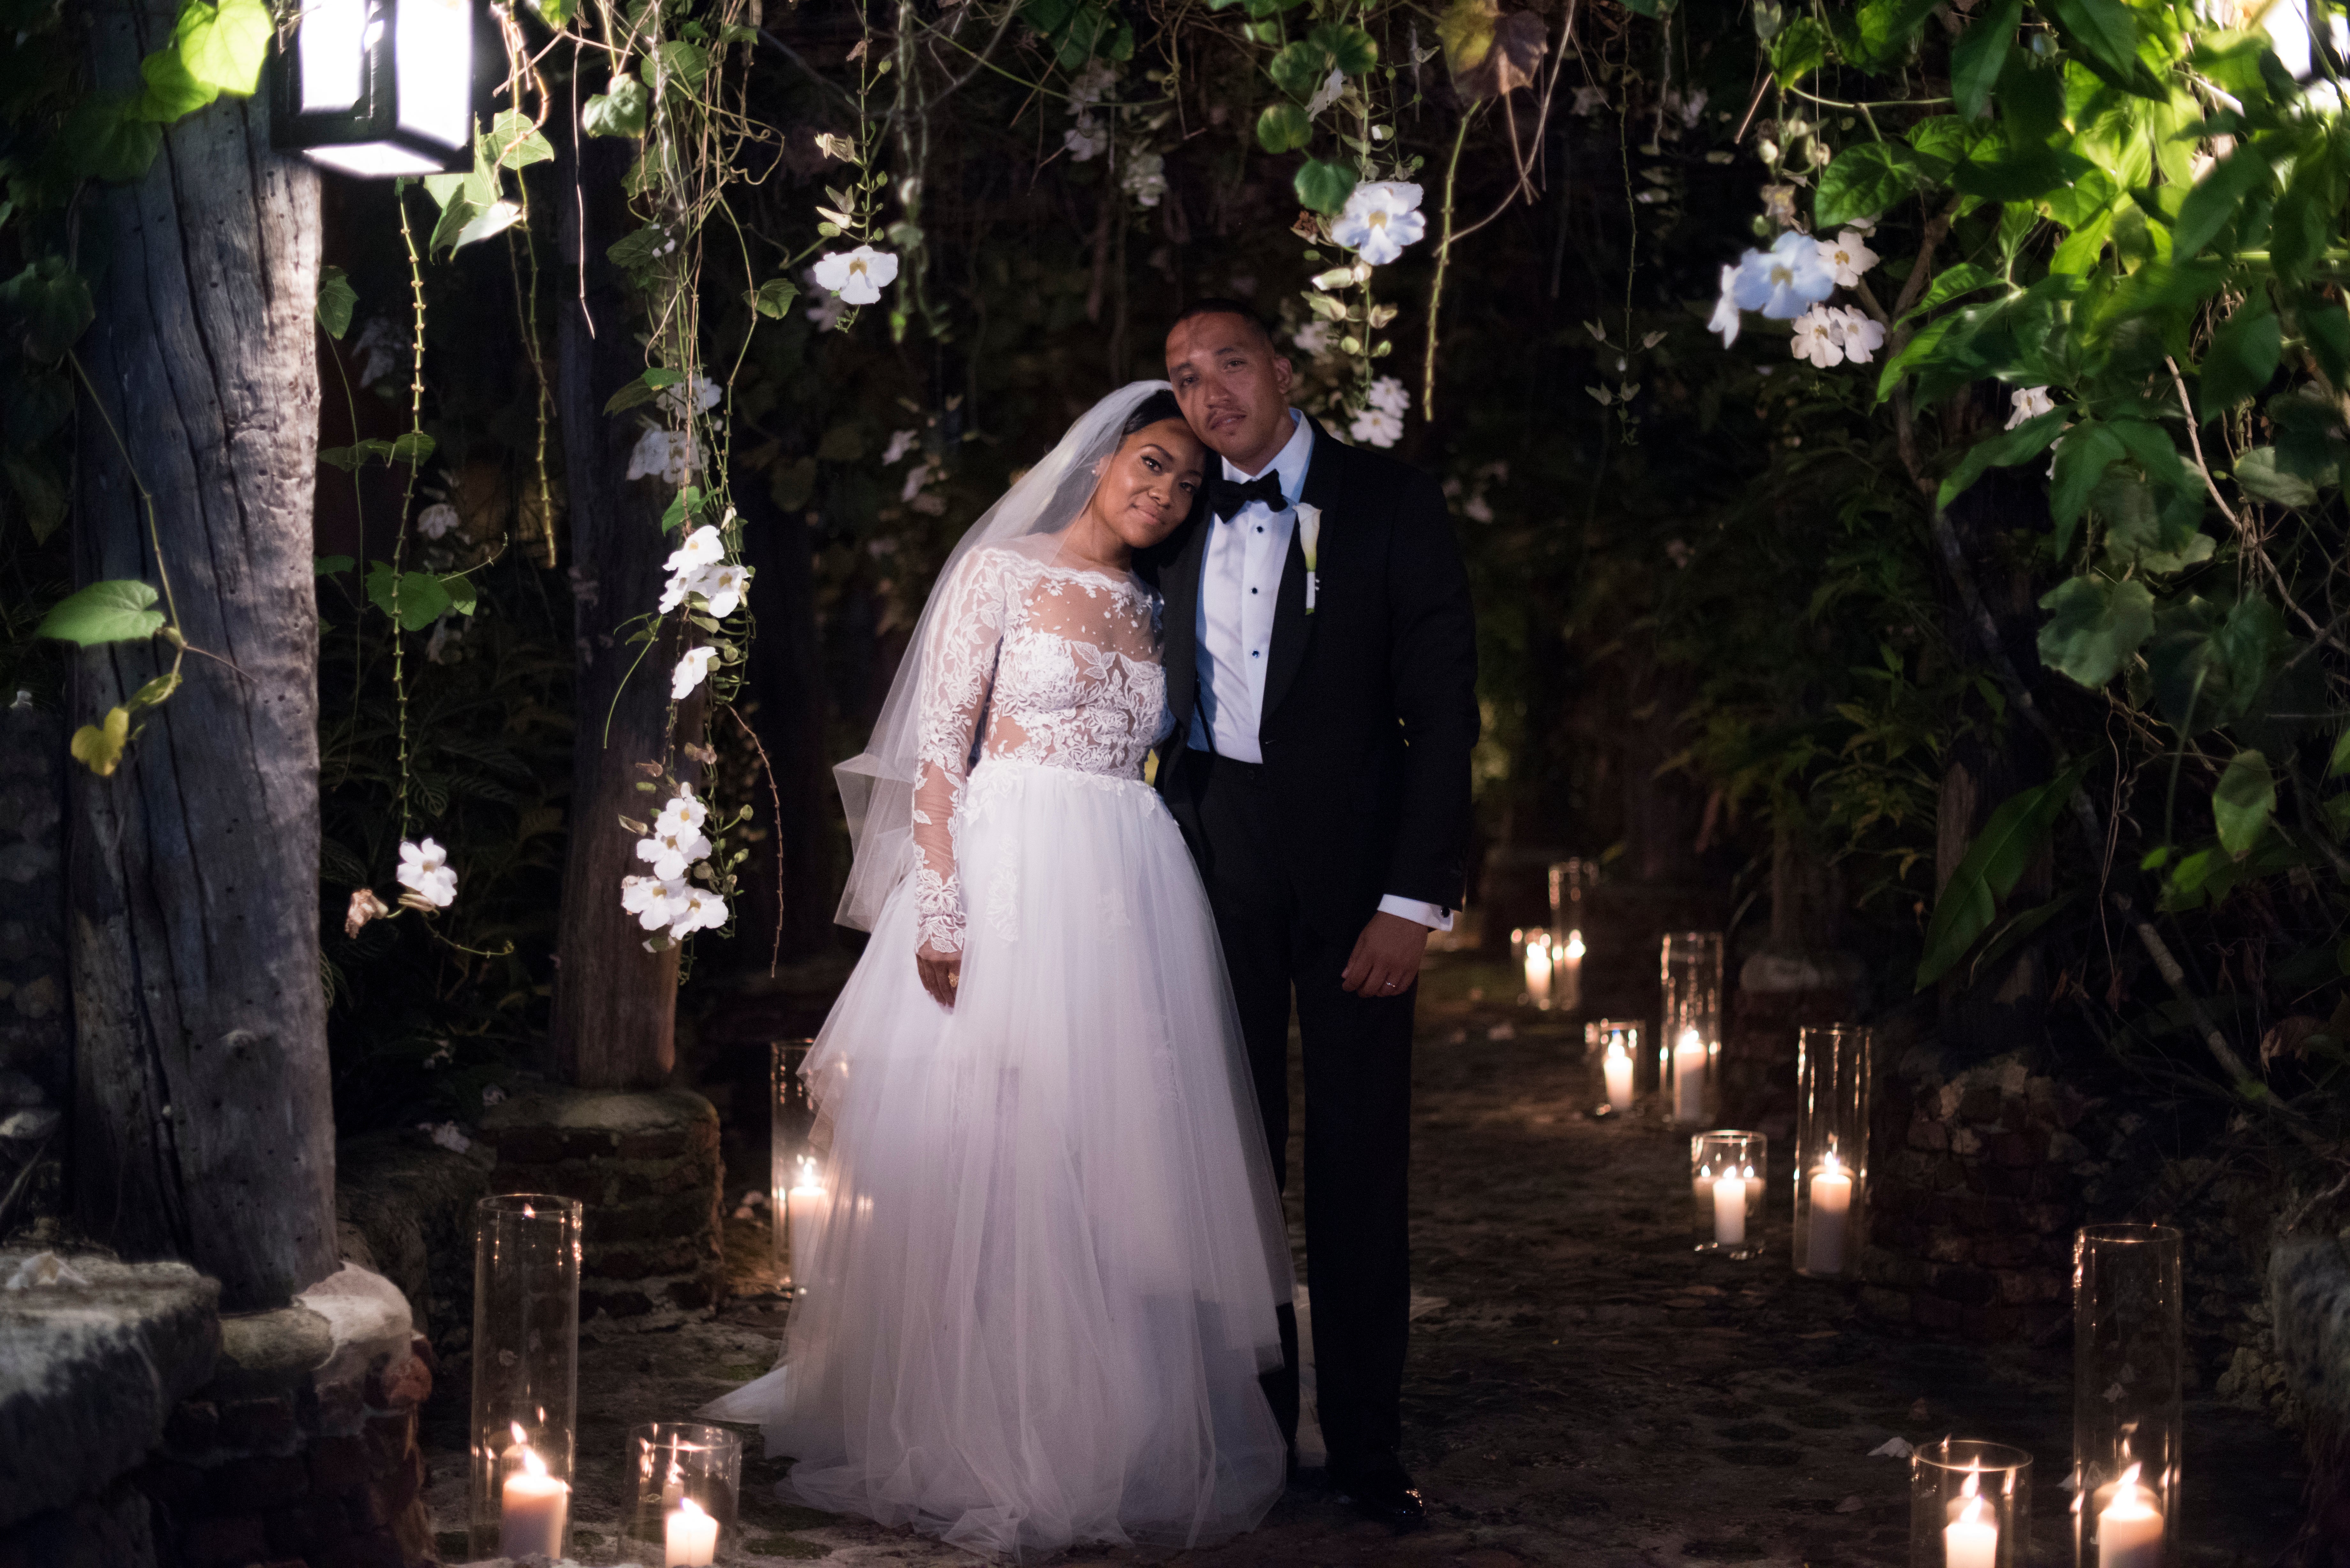 Bridal Bliss: Rhudy and Christina's Island Wedding Was Simply Beautiful
